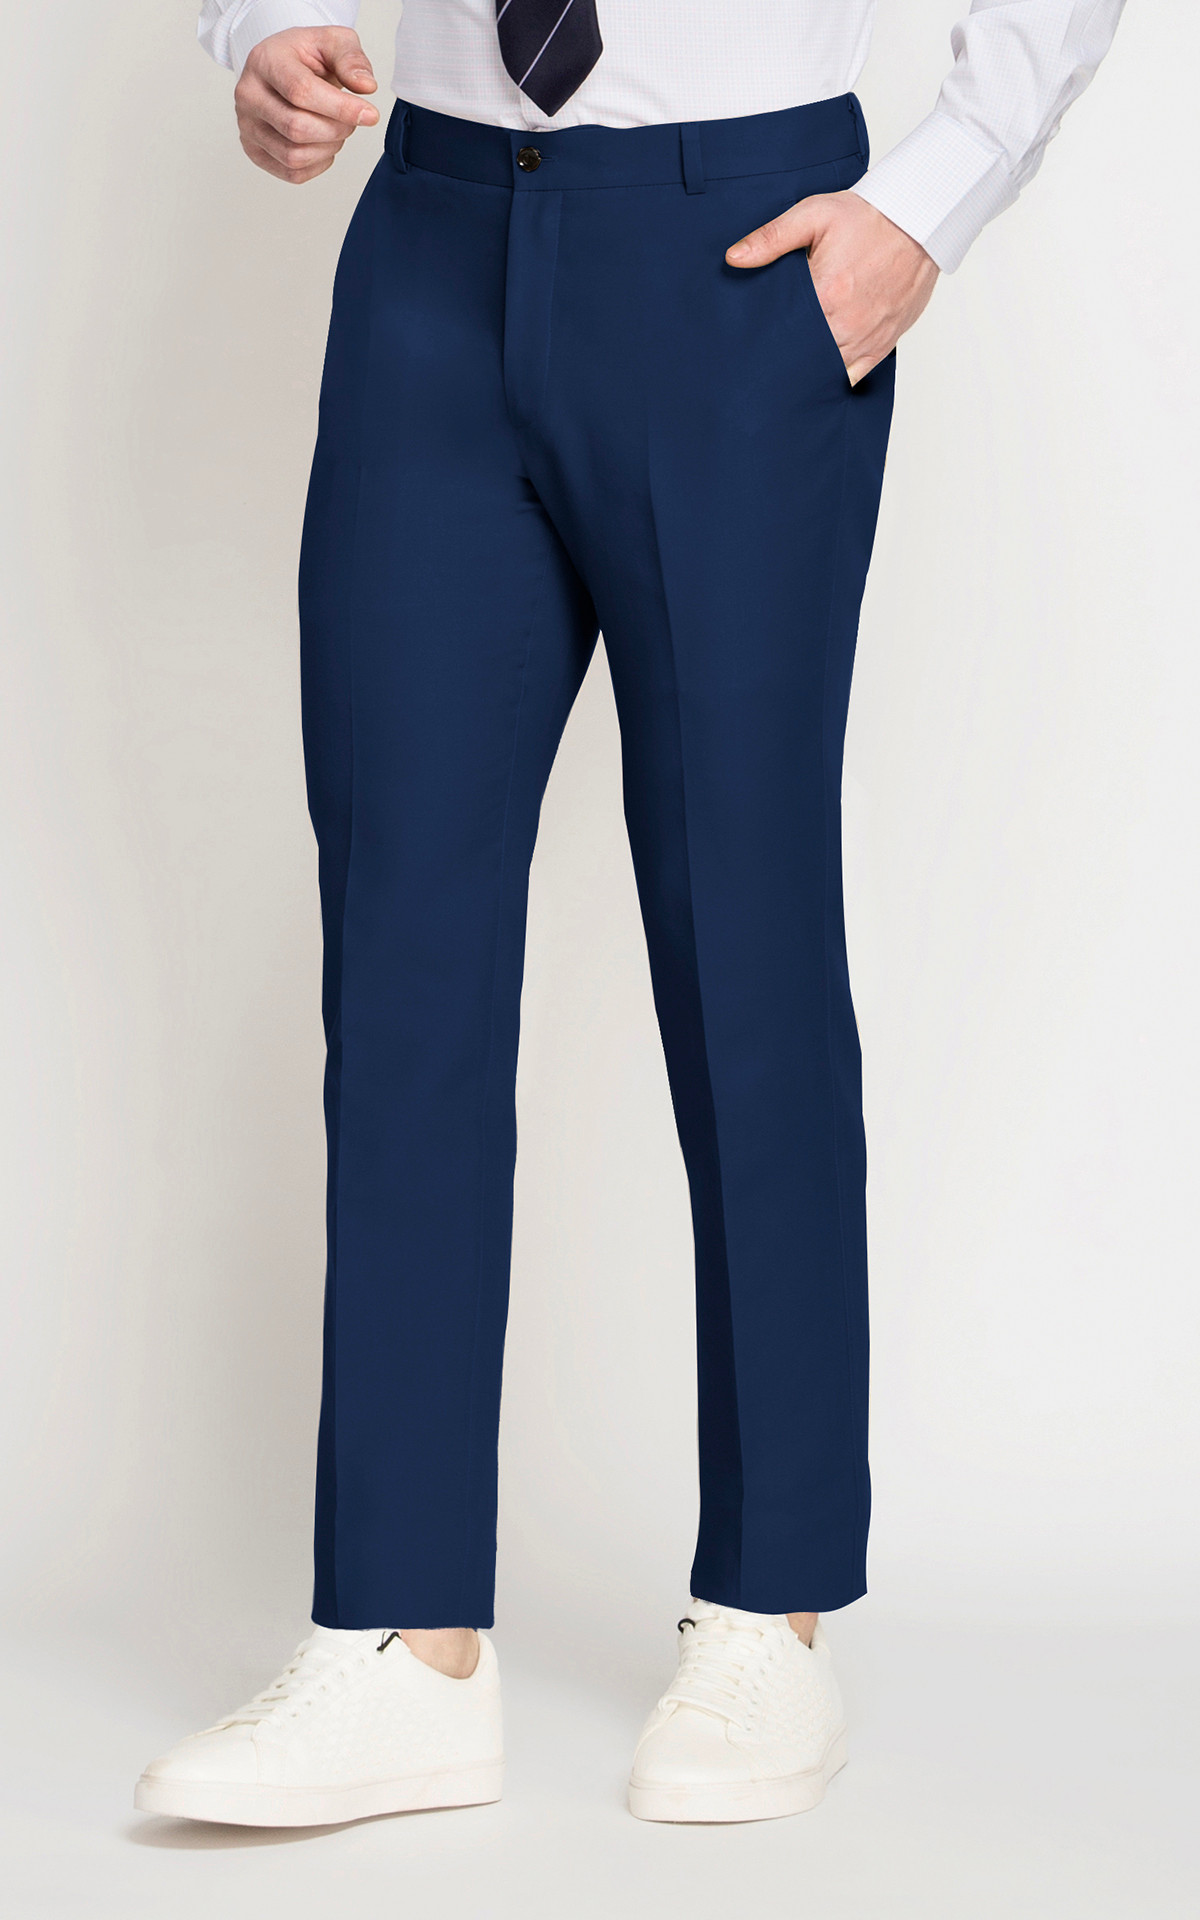 Buy Men Khaki Custom Fit Solid Casual Trousers Online  750733  Allen Solly